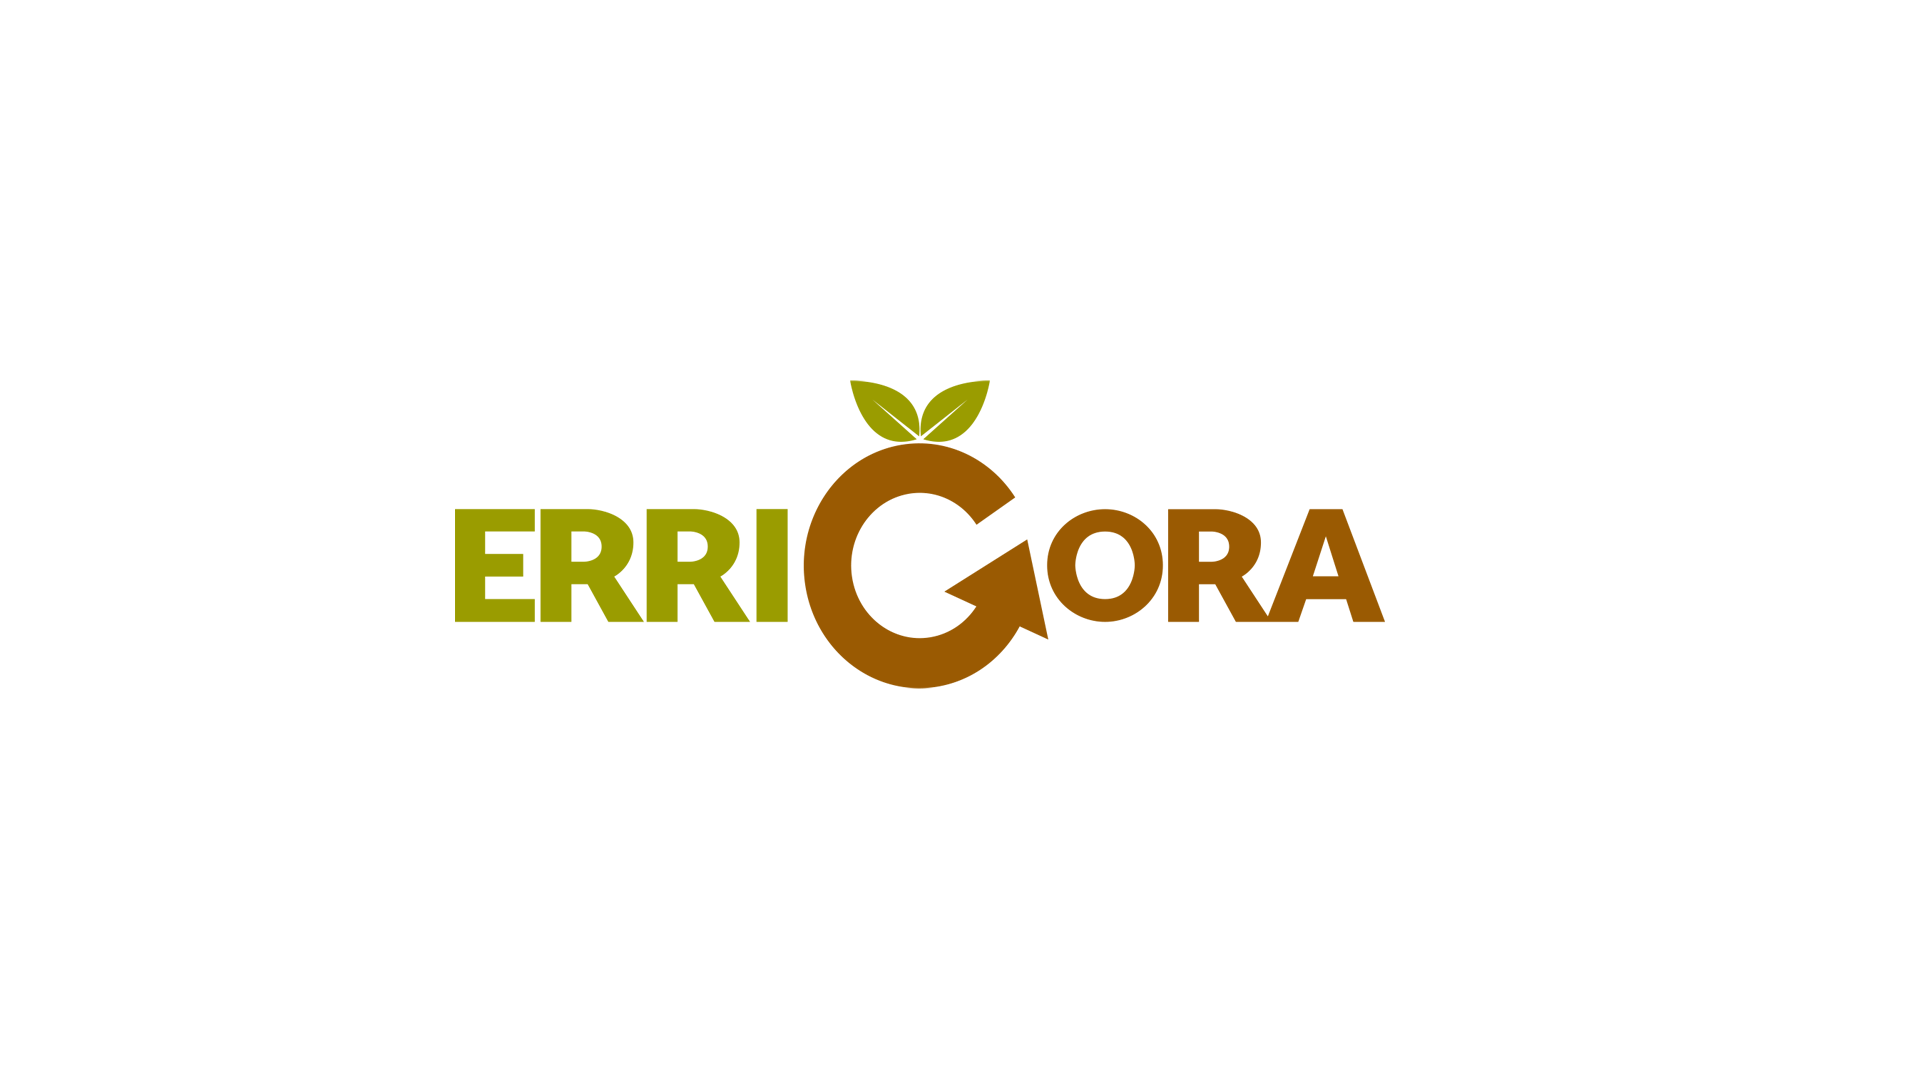 xerrigora-logo2.png.pagespeed.ic.JjIHr9vSEJ